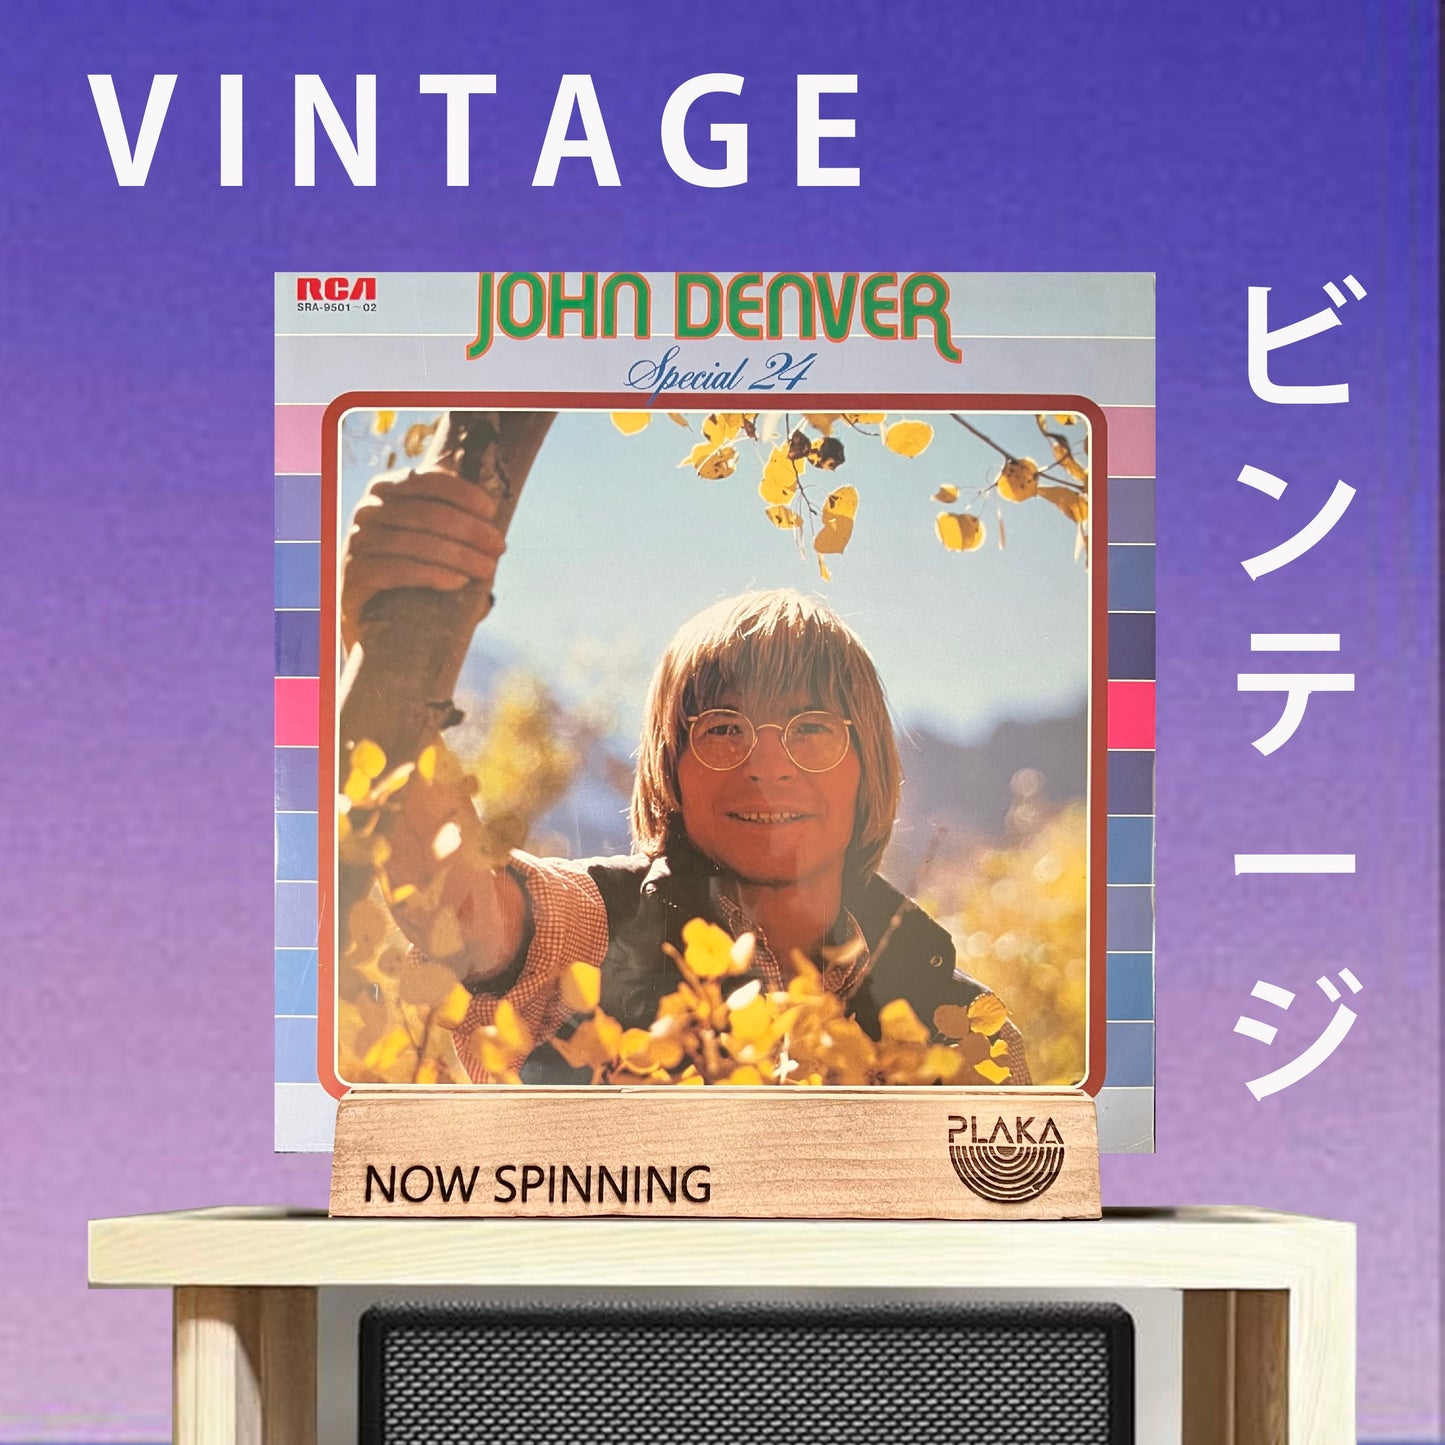 John Denver - Special 24